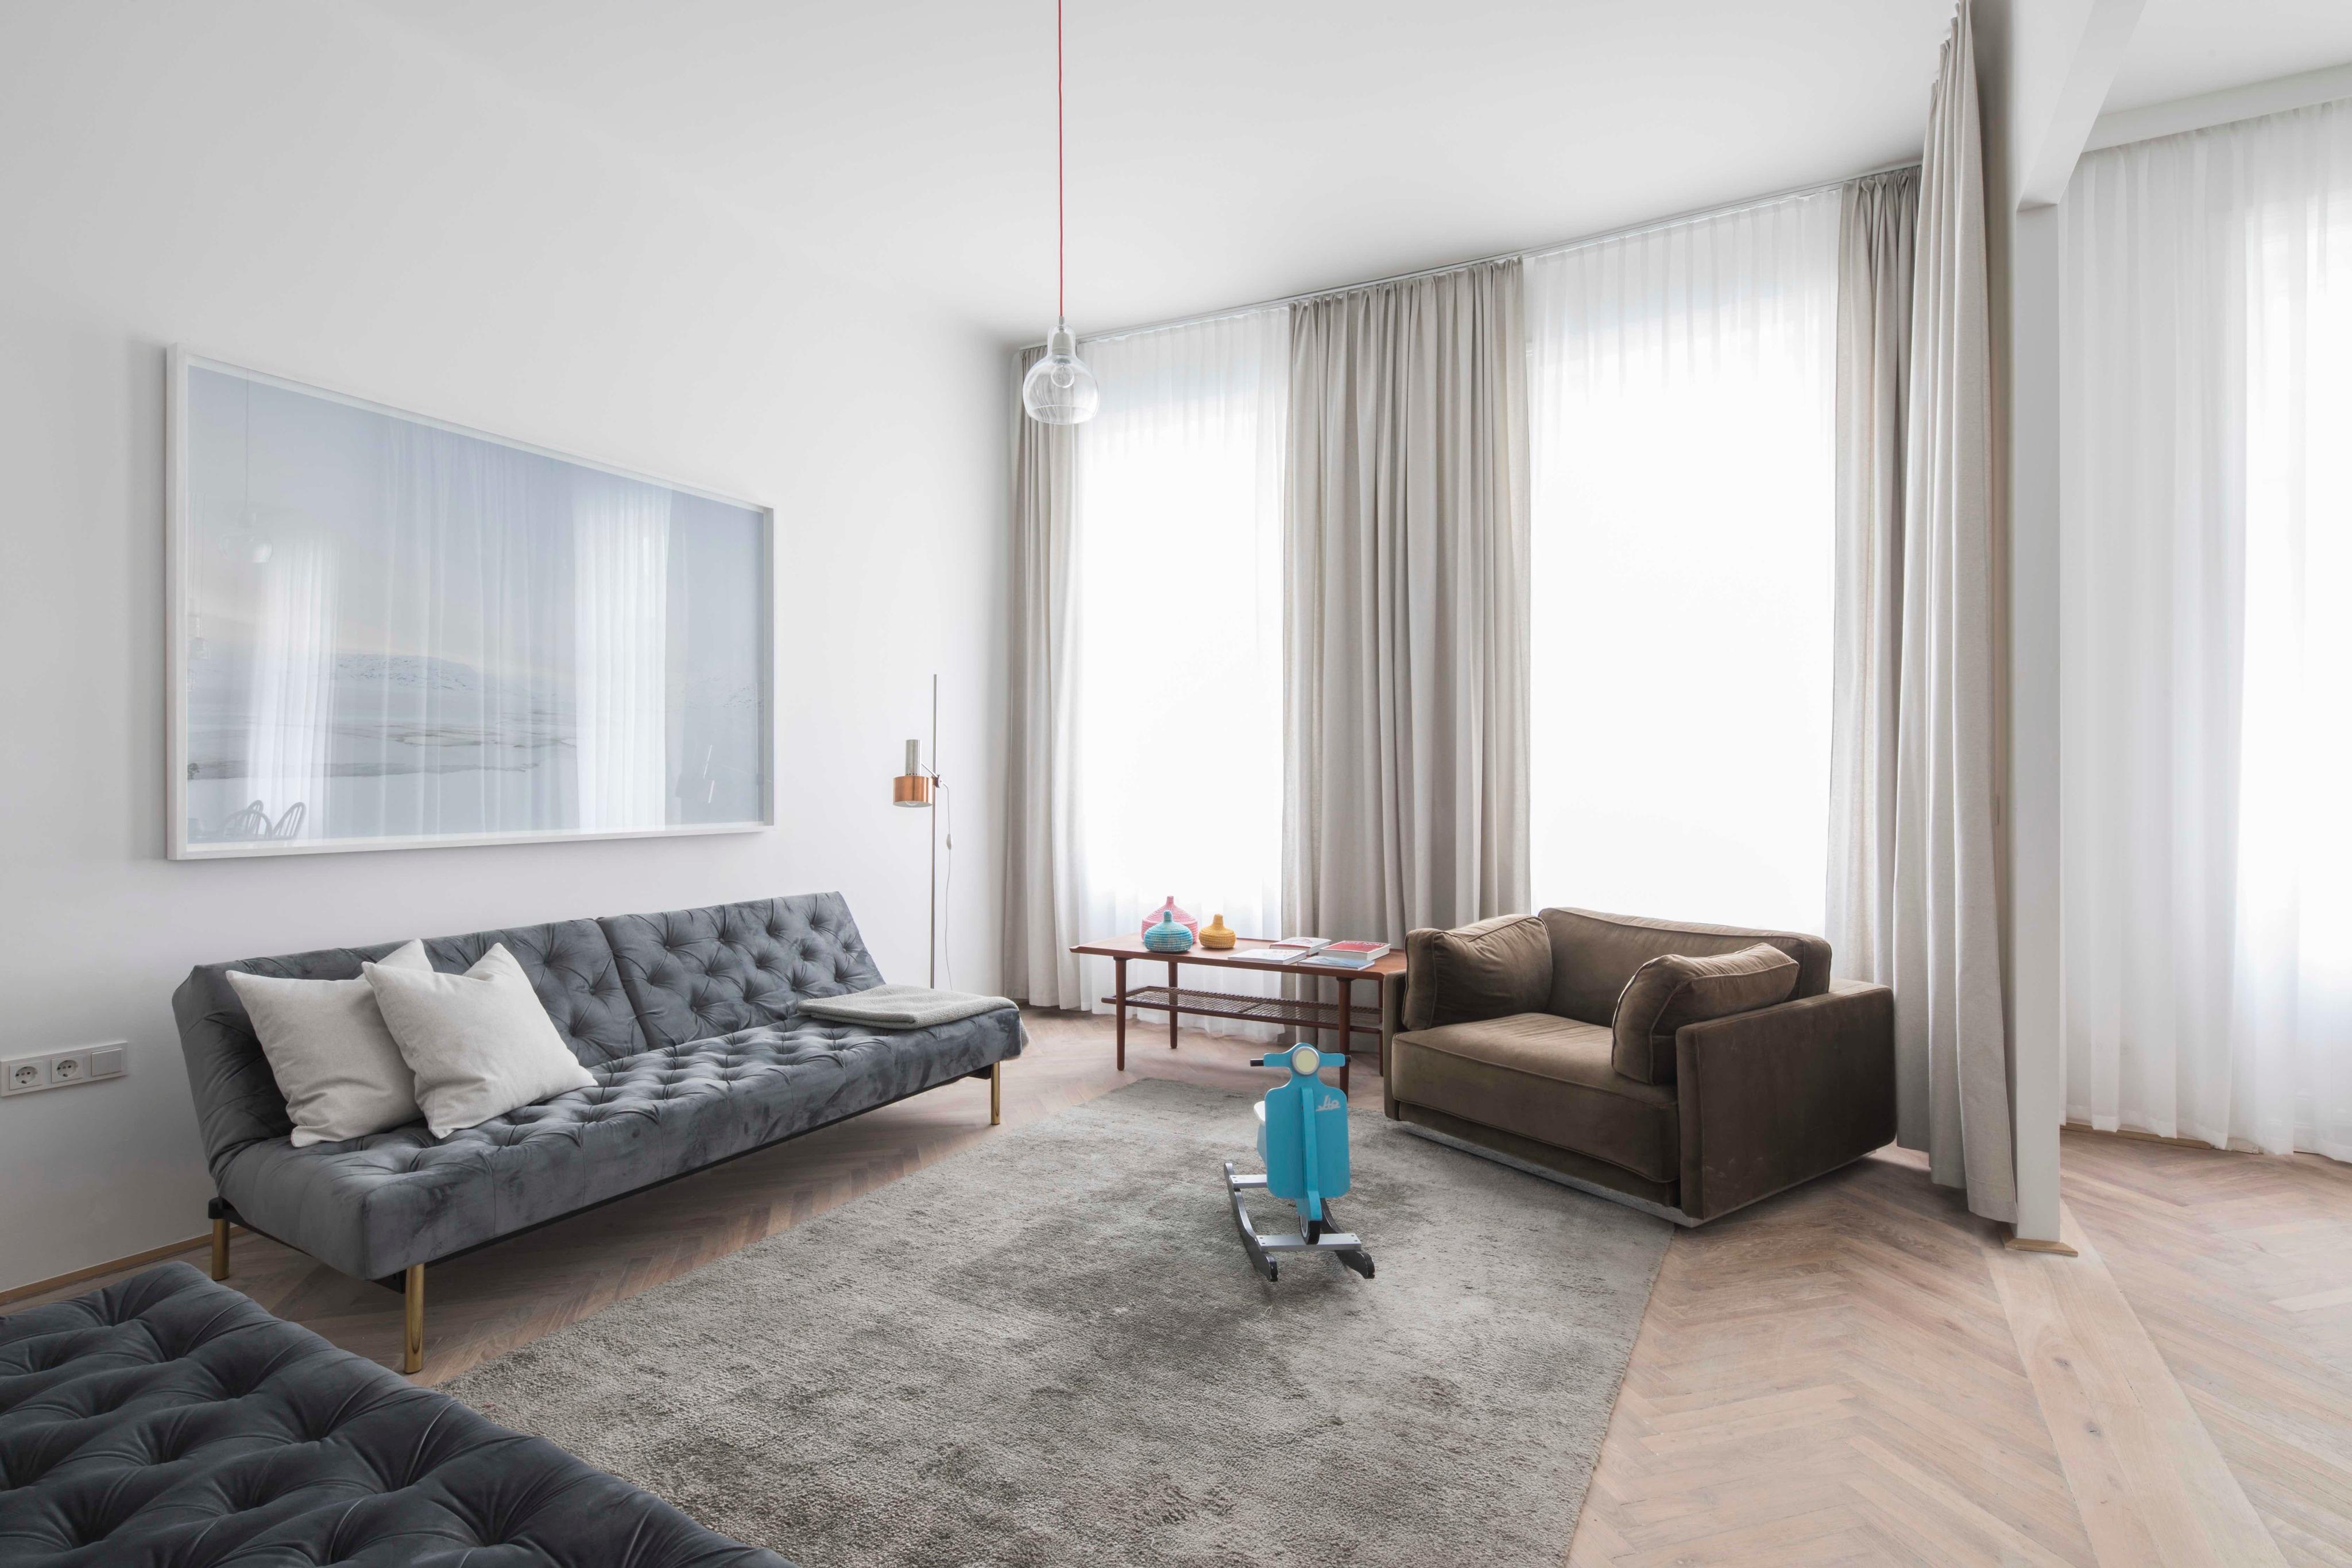 Apartment E&E
Wien
#innenarchitektur #interiordesign #architektur
@Destilat©Monika Nguyen